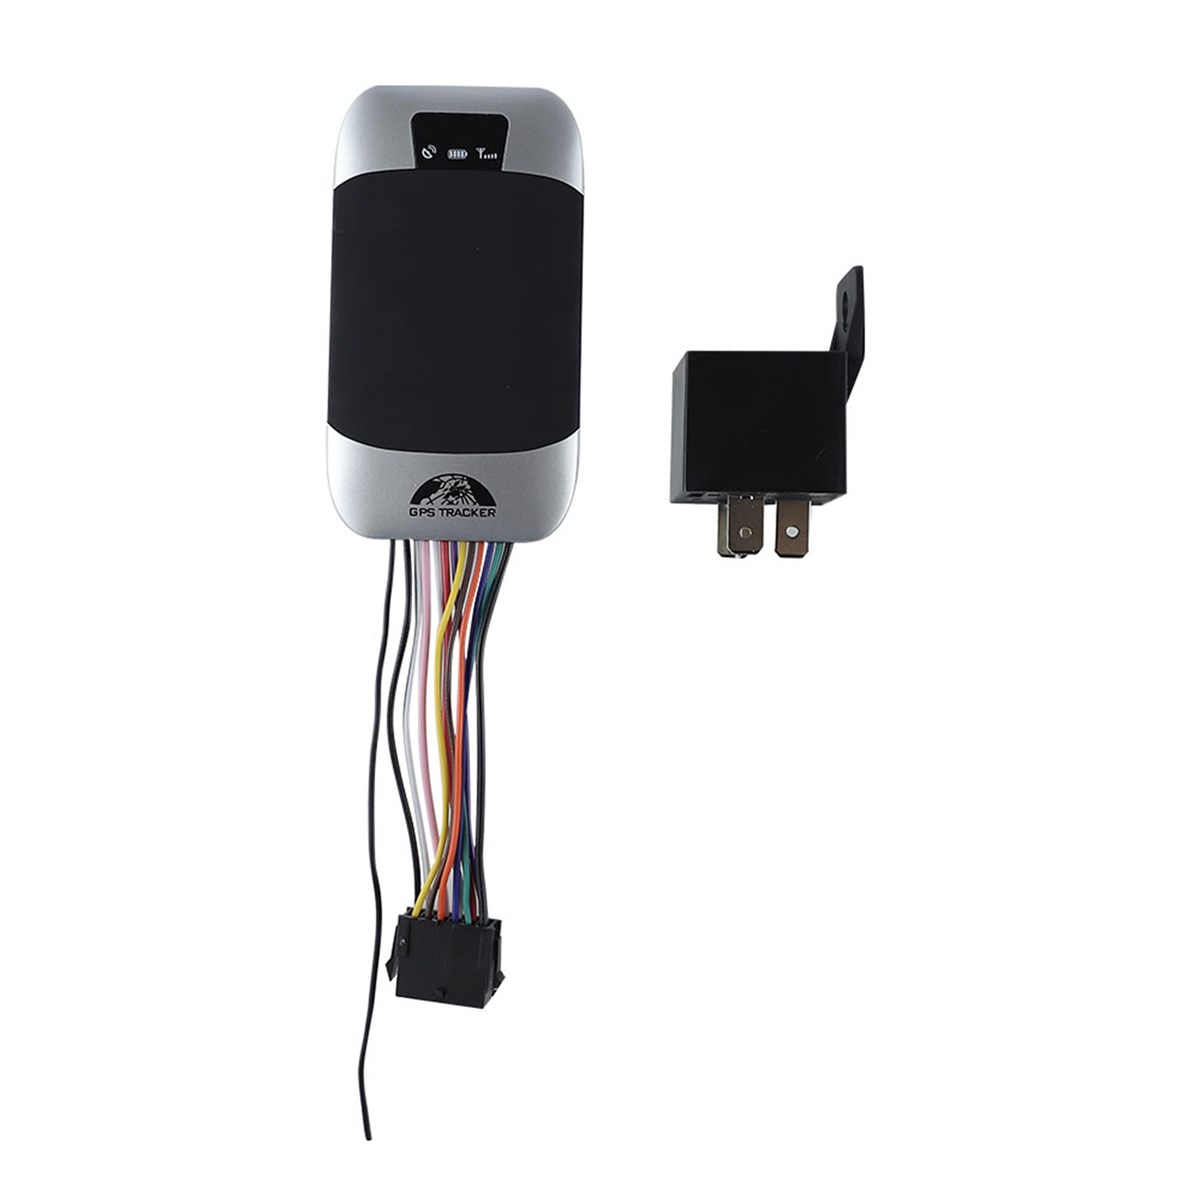 GPS Coban Tk303f Alarmas Tracker Vehicle&Car&Motorcycle Tracking Device